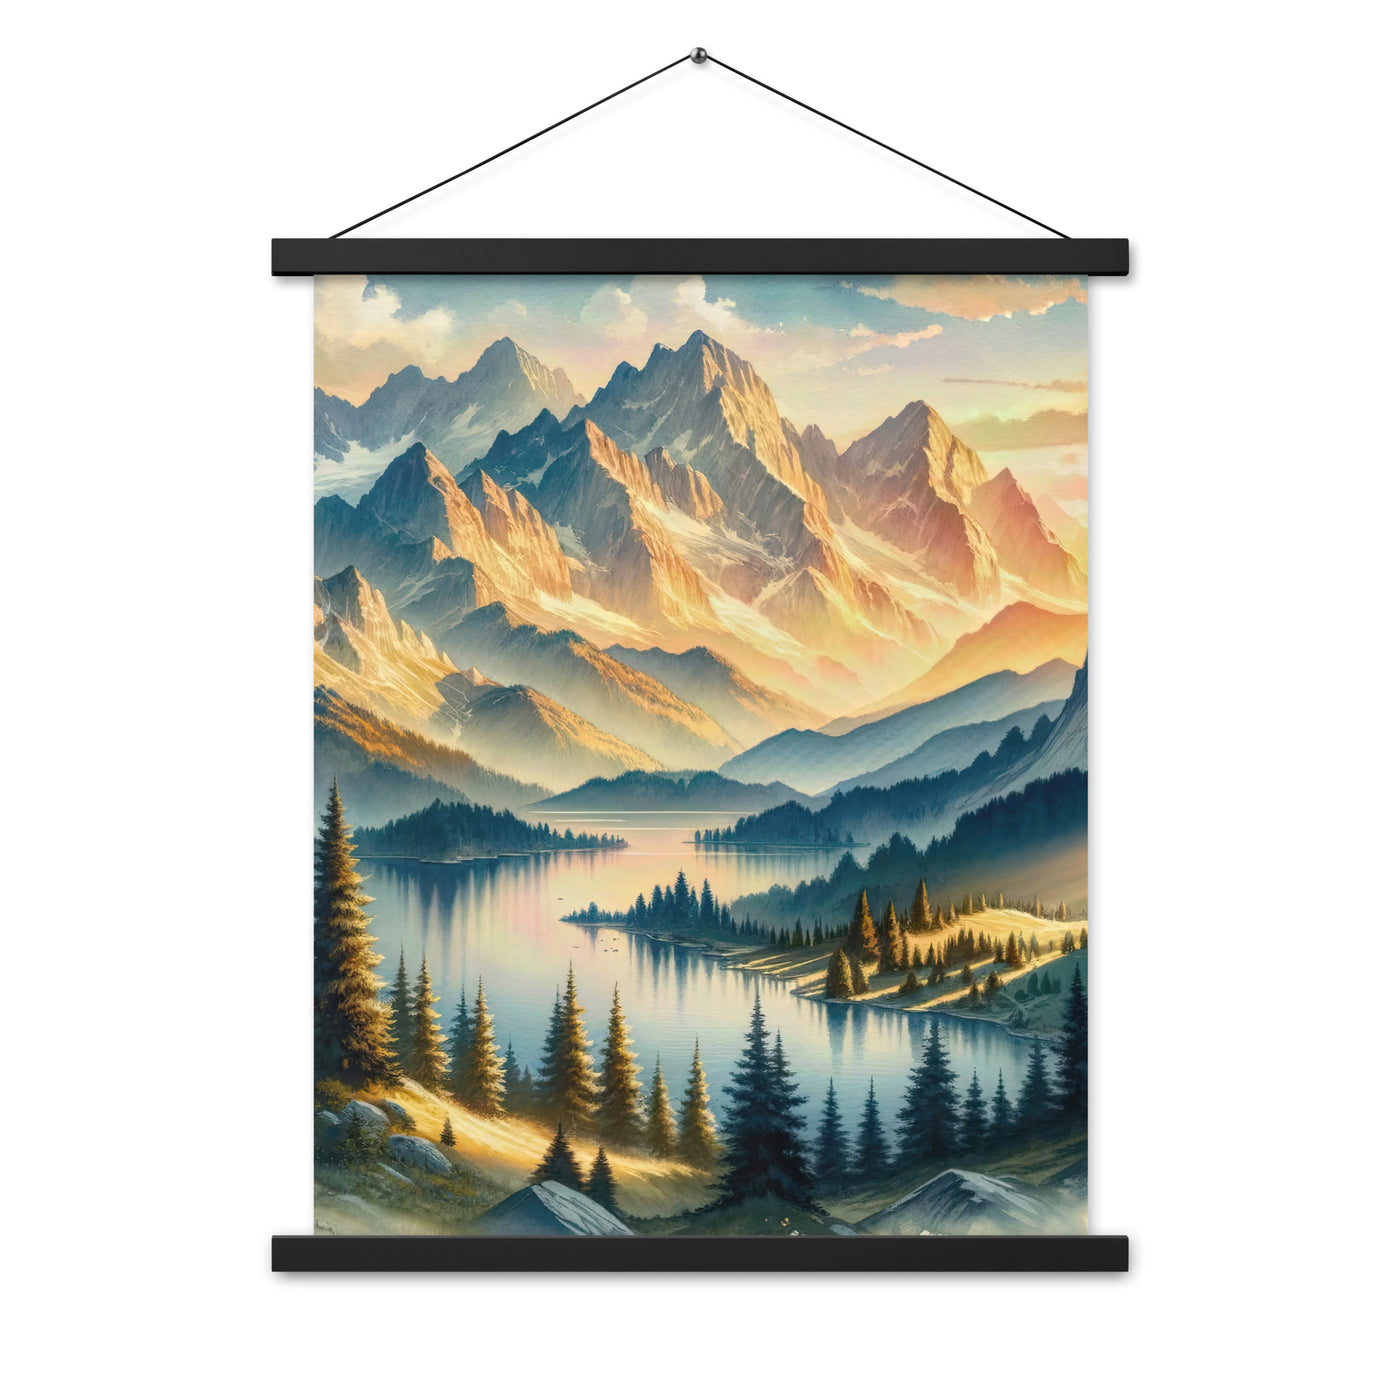 Aquarell der Alpenpracht bei Sonnenuntergang, Berge im goldenen Licht - Premium Poster mit Aufhängung berge xxx yyy zzz 45.7 x 61 cm